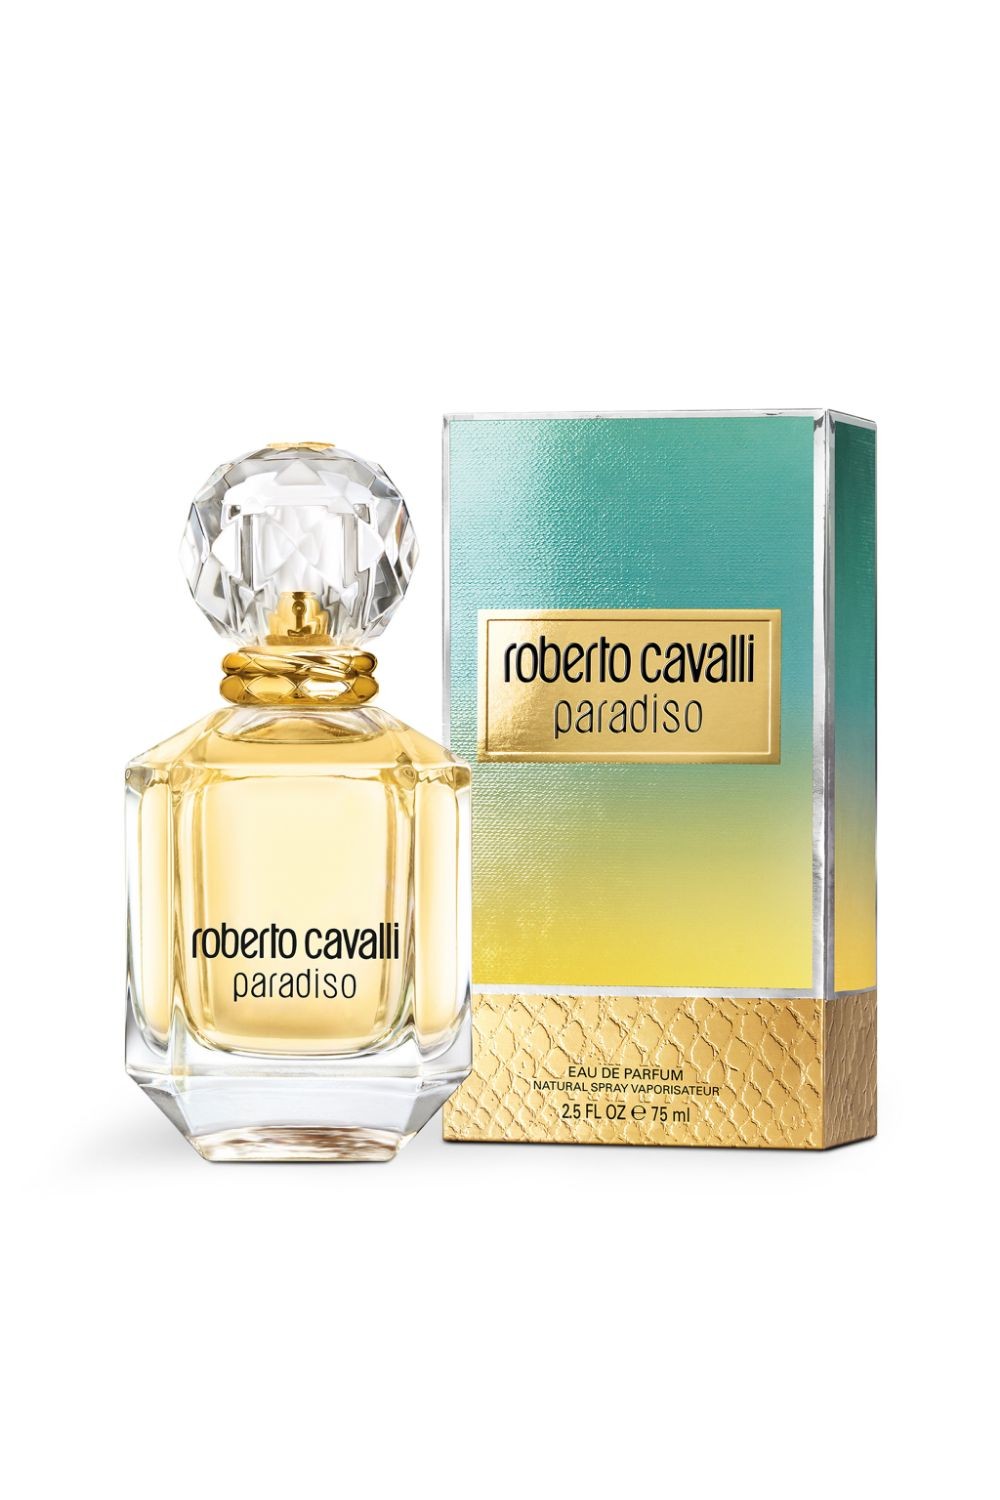 roberto-cavalli-paradiso-eau-de-parfum-75-ml_12989403_15032514_1000